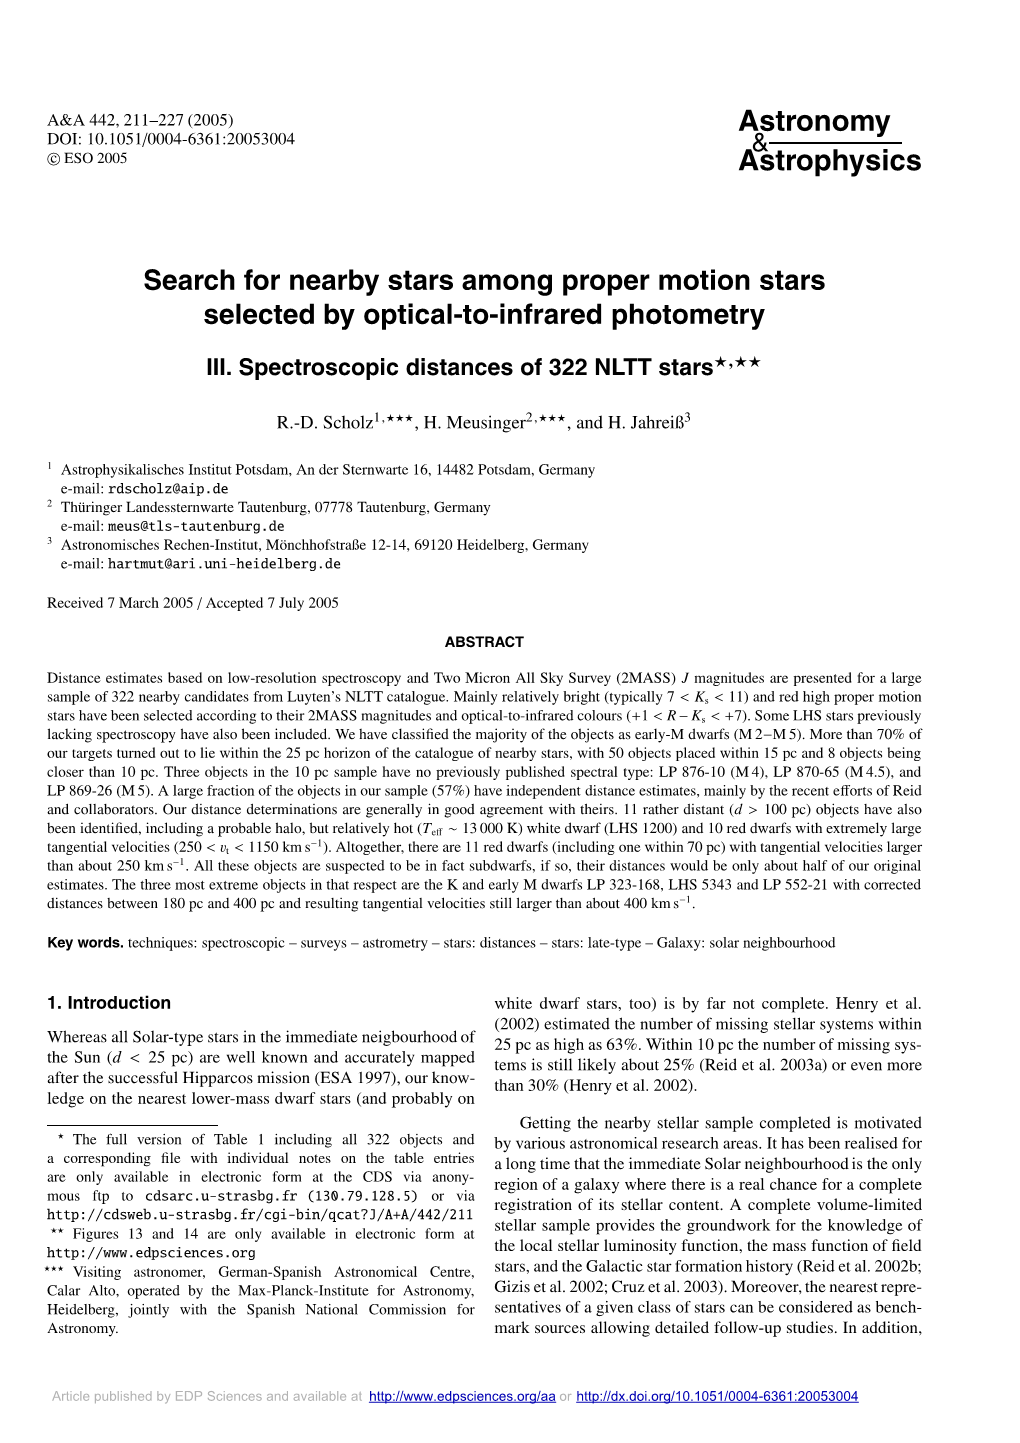 III. Spectroscopic Distances of 322 NLTT Stars�,